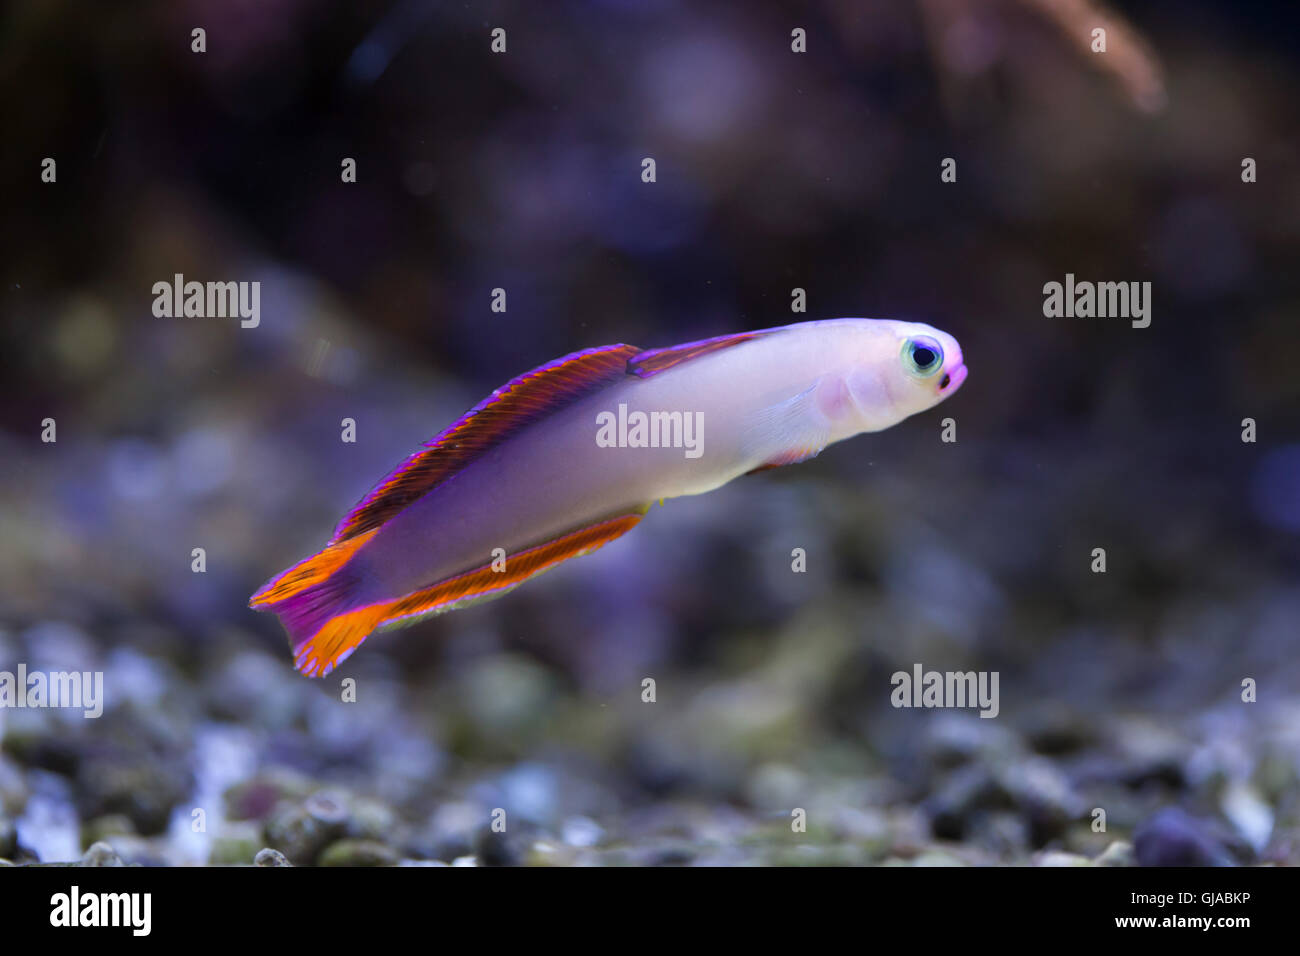 Elegant firefish (Nemateleotris decora), also known as the purple firefish. Stock Photo